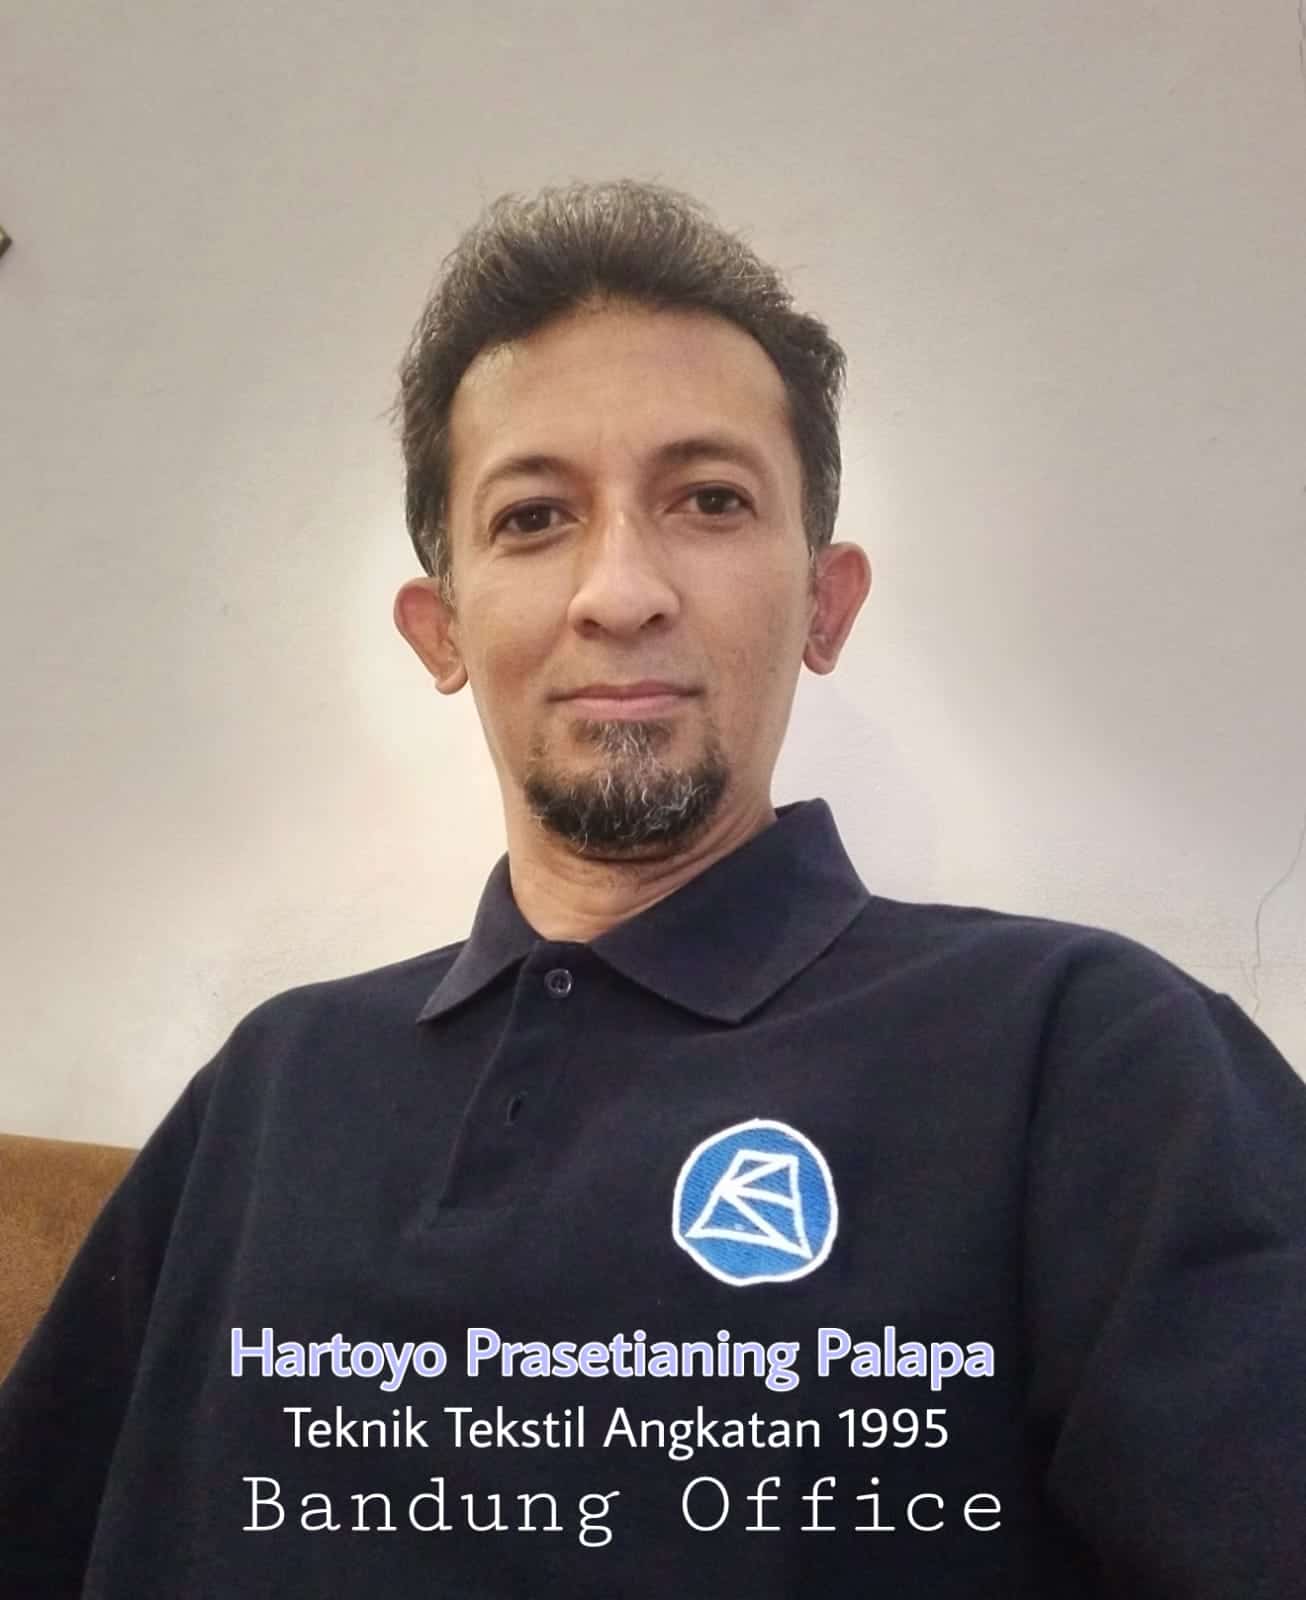 Hartoyo Prasetyaning Palapa